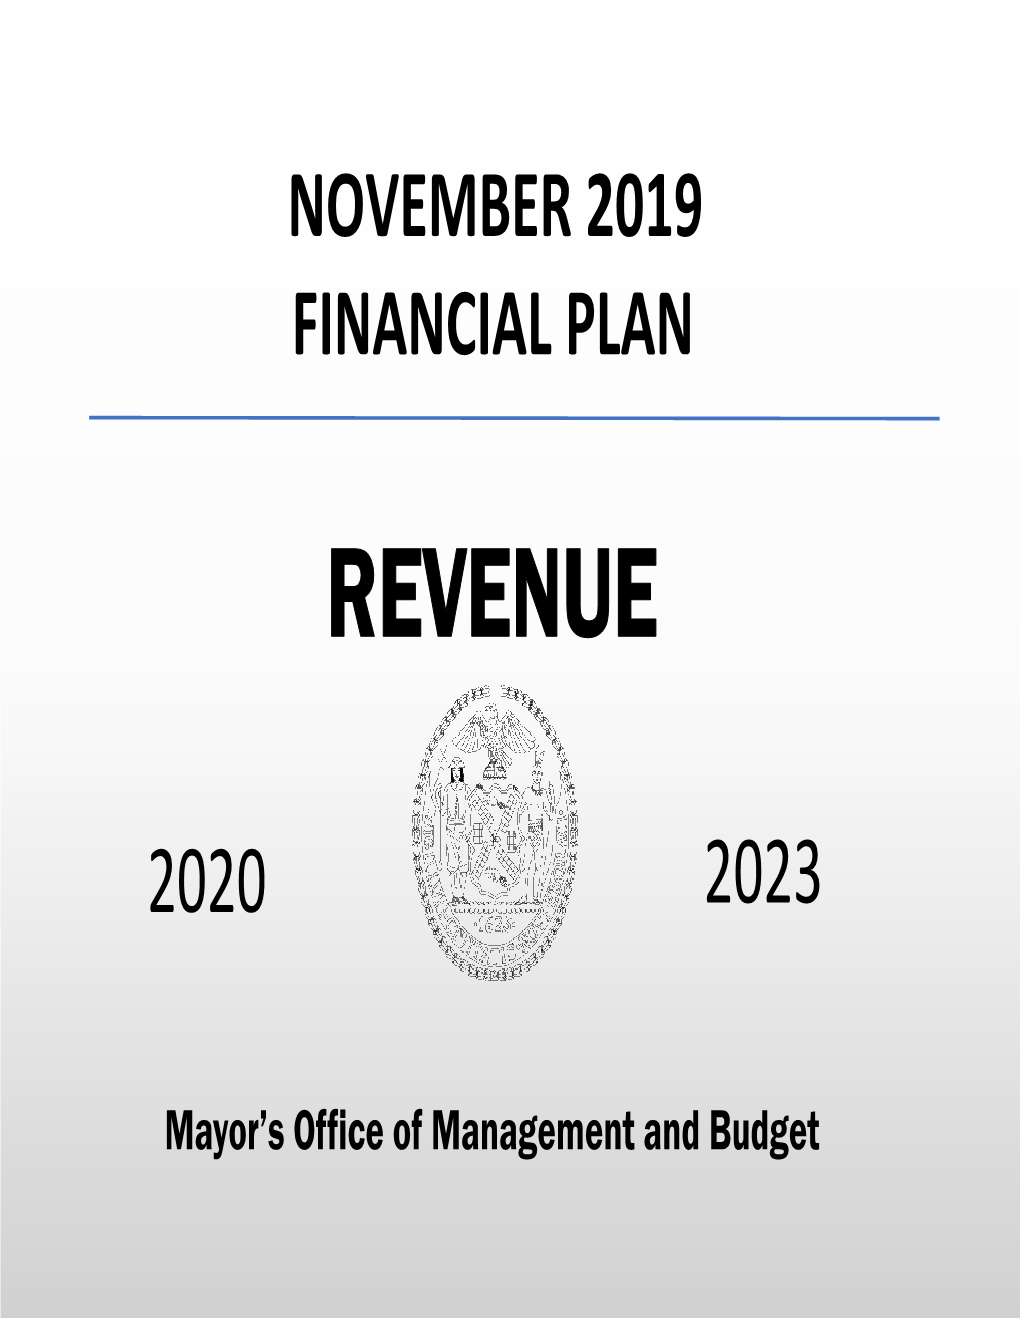 November 2019 Financial Plan, Fiscal Years 2020-2023